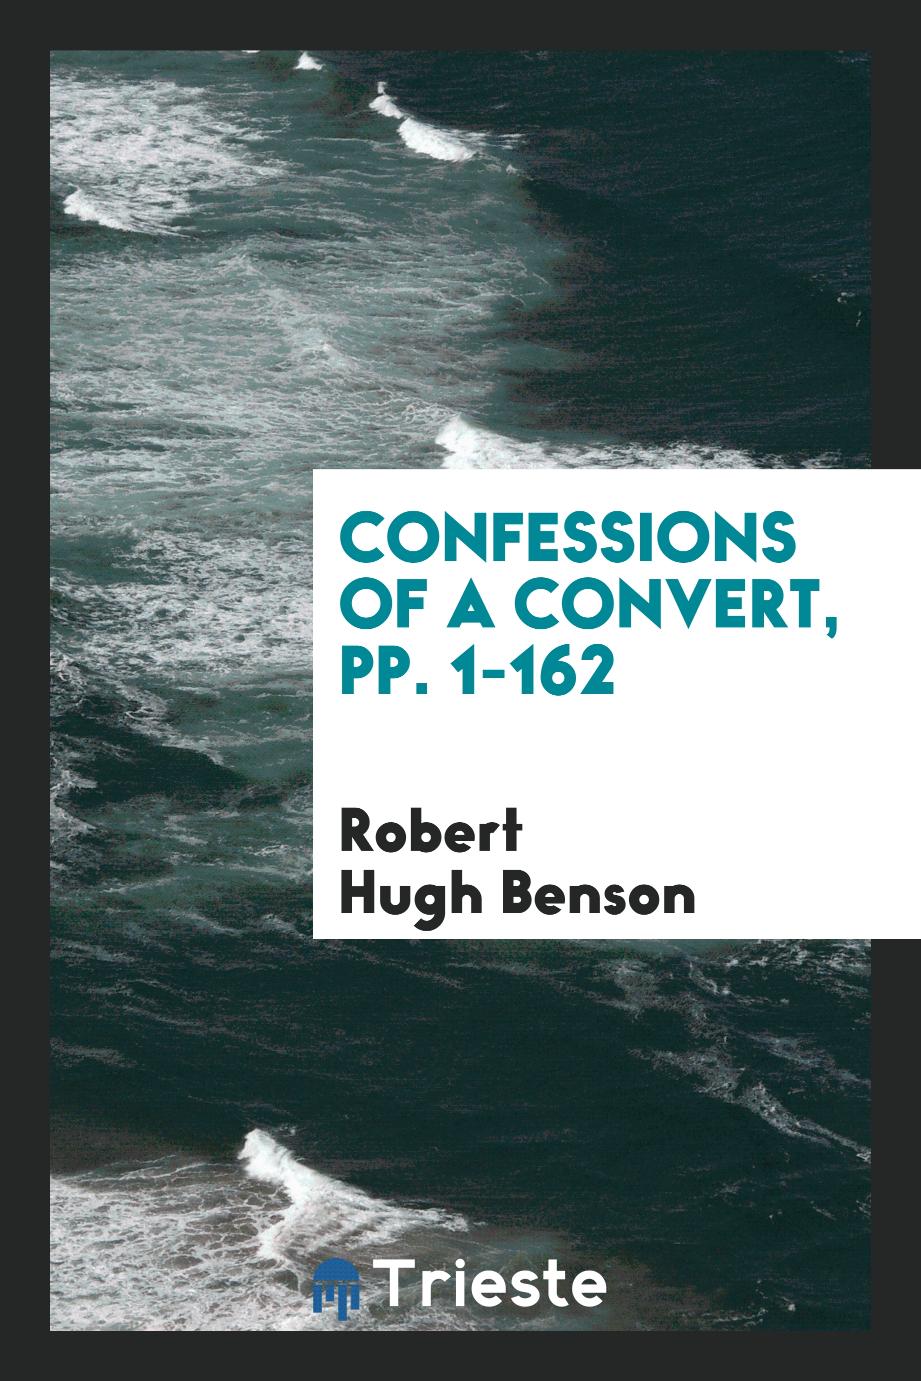 Confessions of a Convert, pp. 1-162